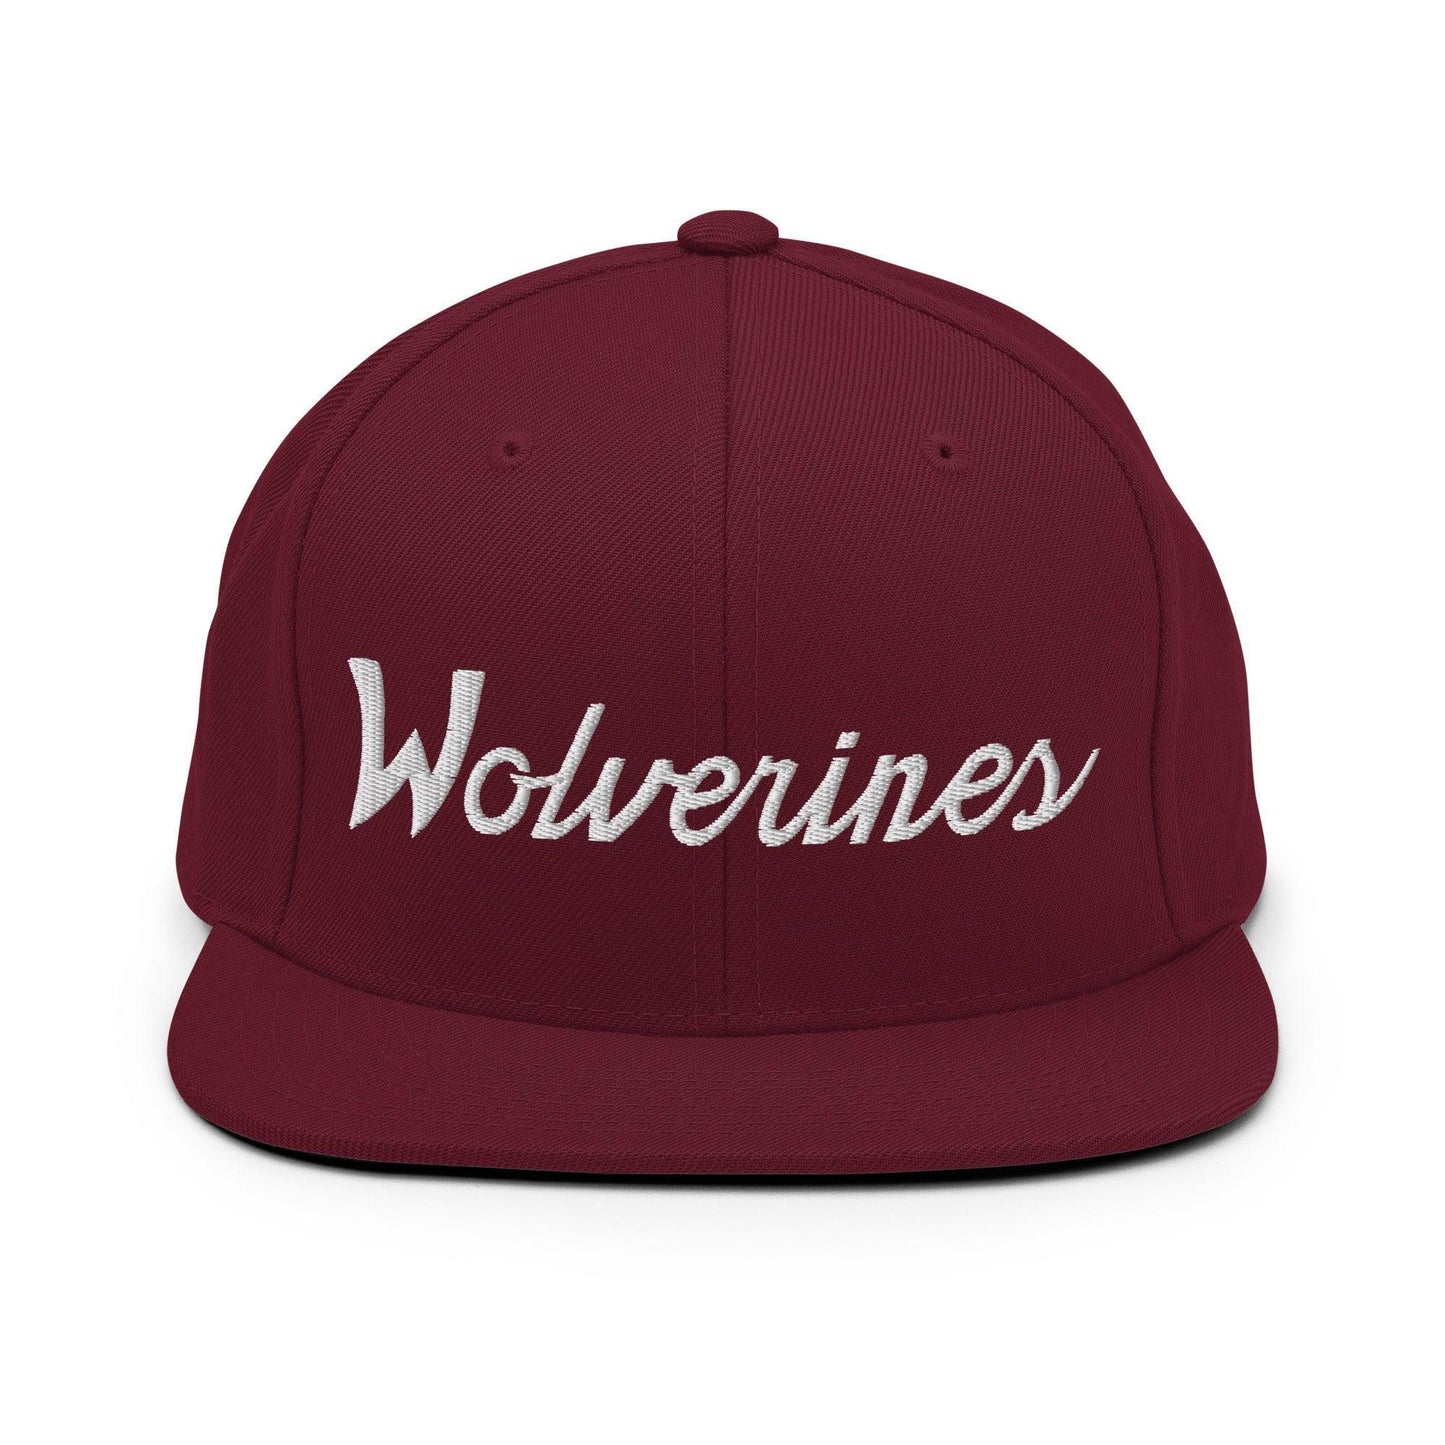 Wolverines School Mascot Script Snapback Hat Maroon